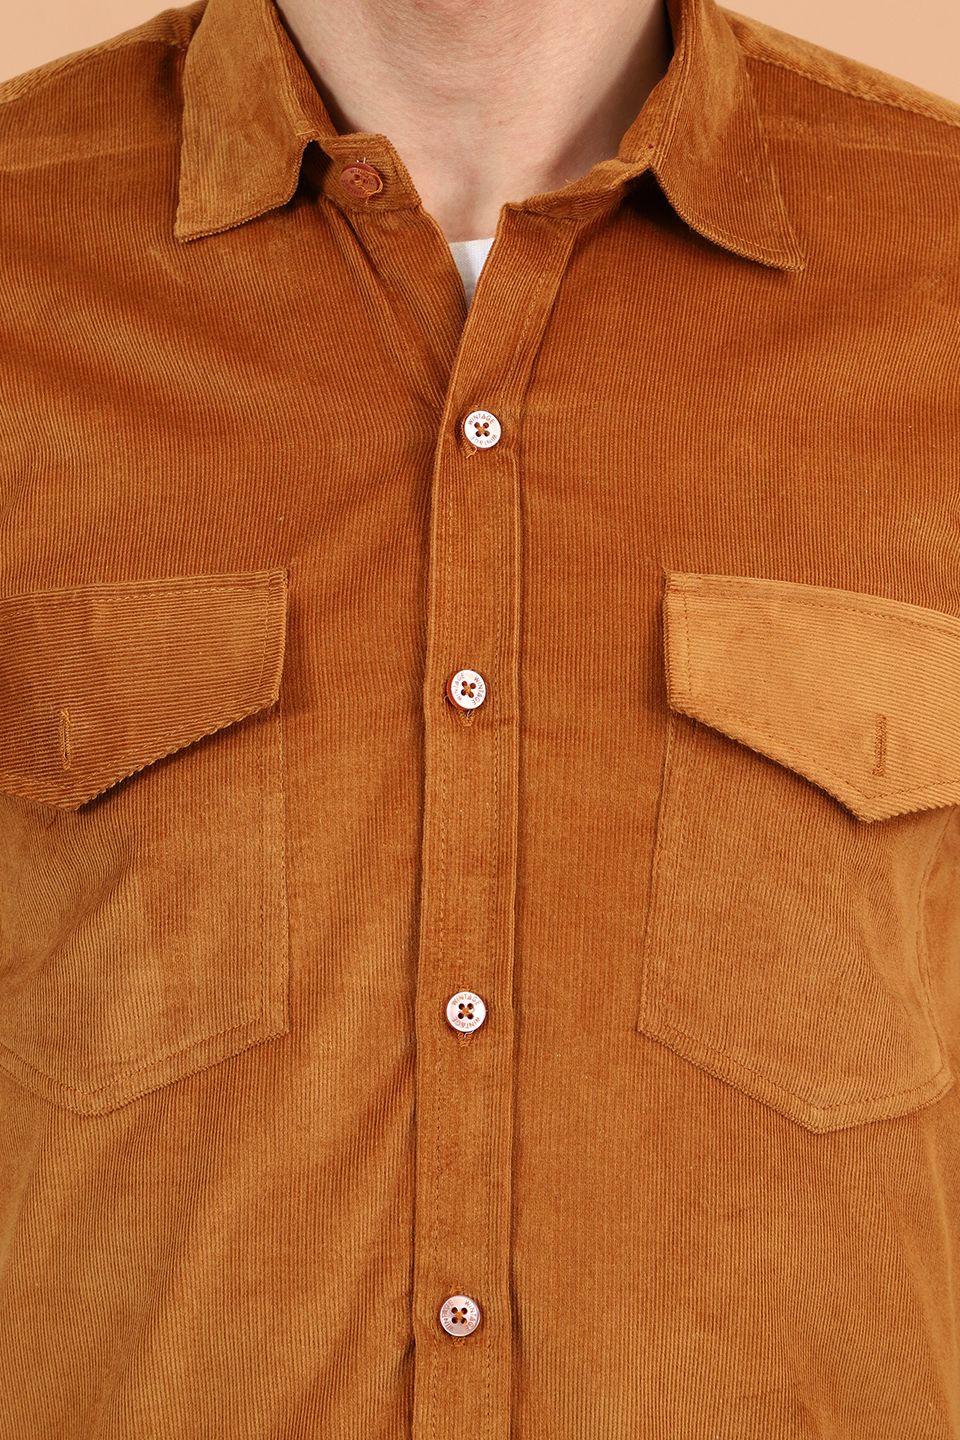 Corduroy Cotton Brown 1 Solid Shirt